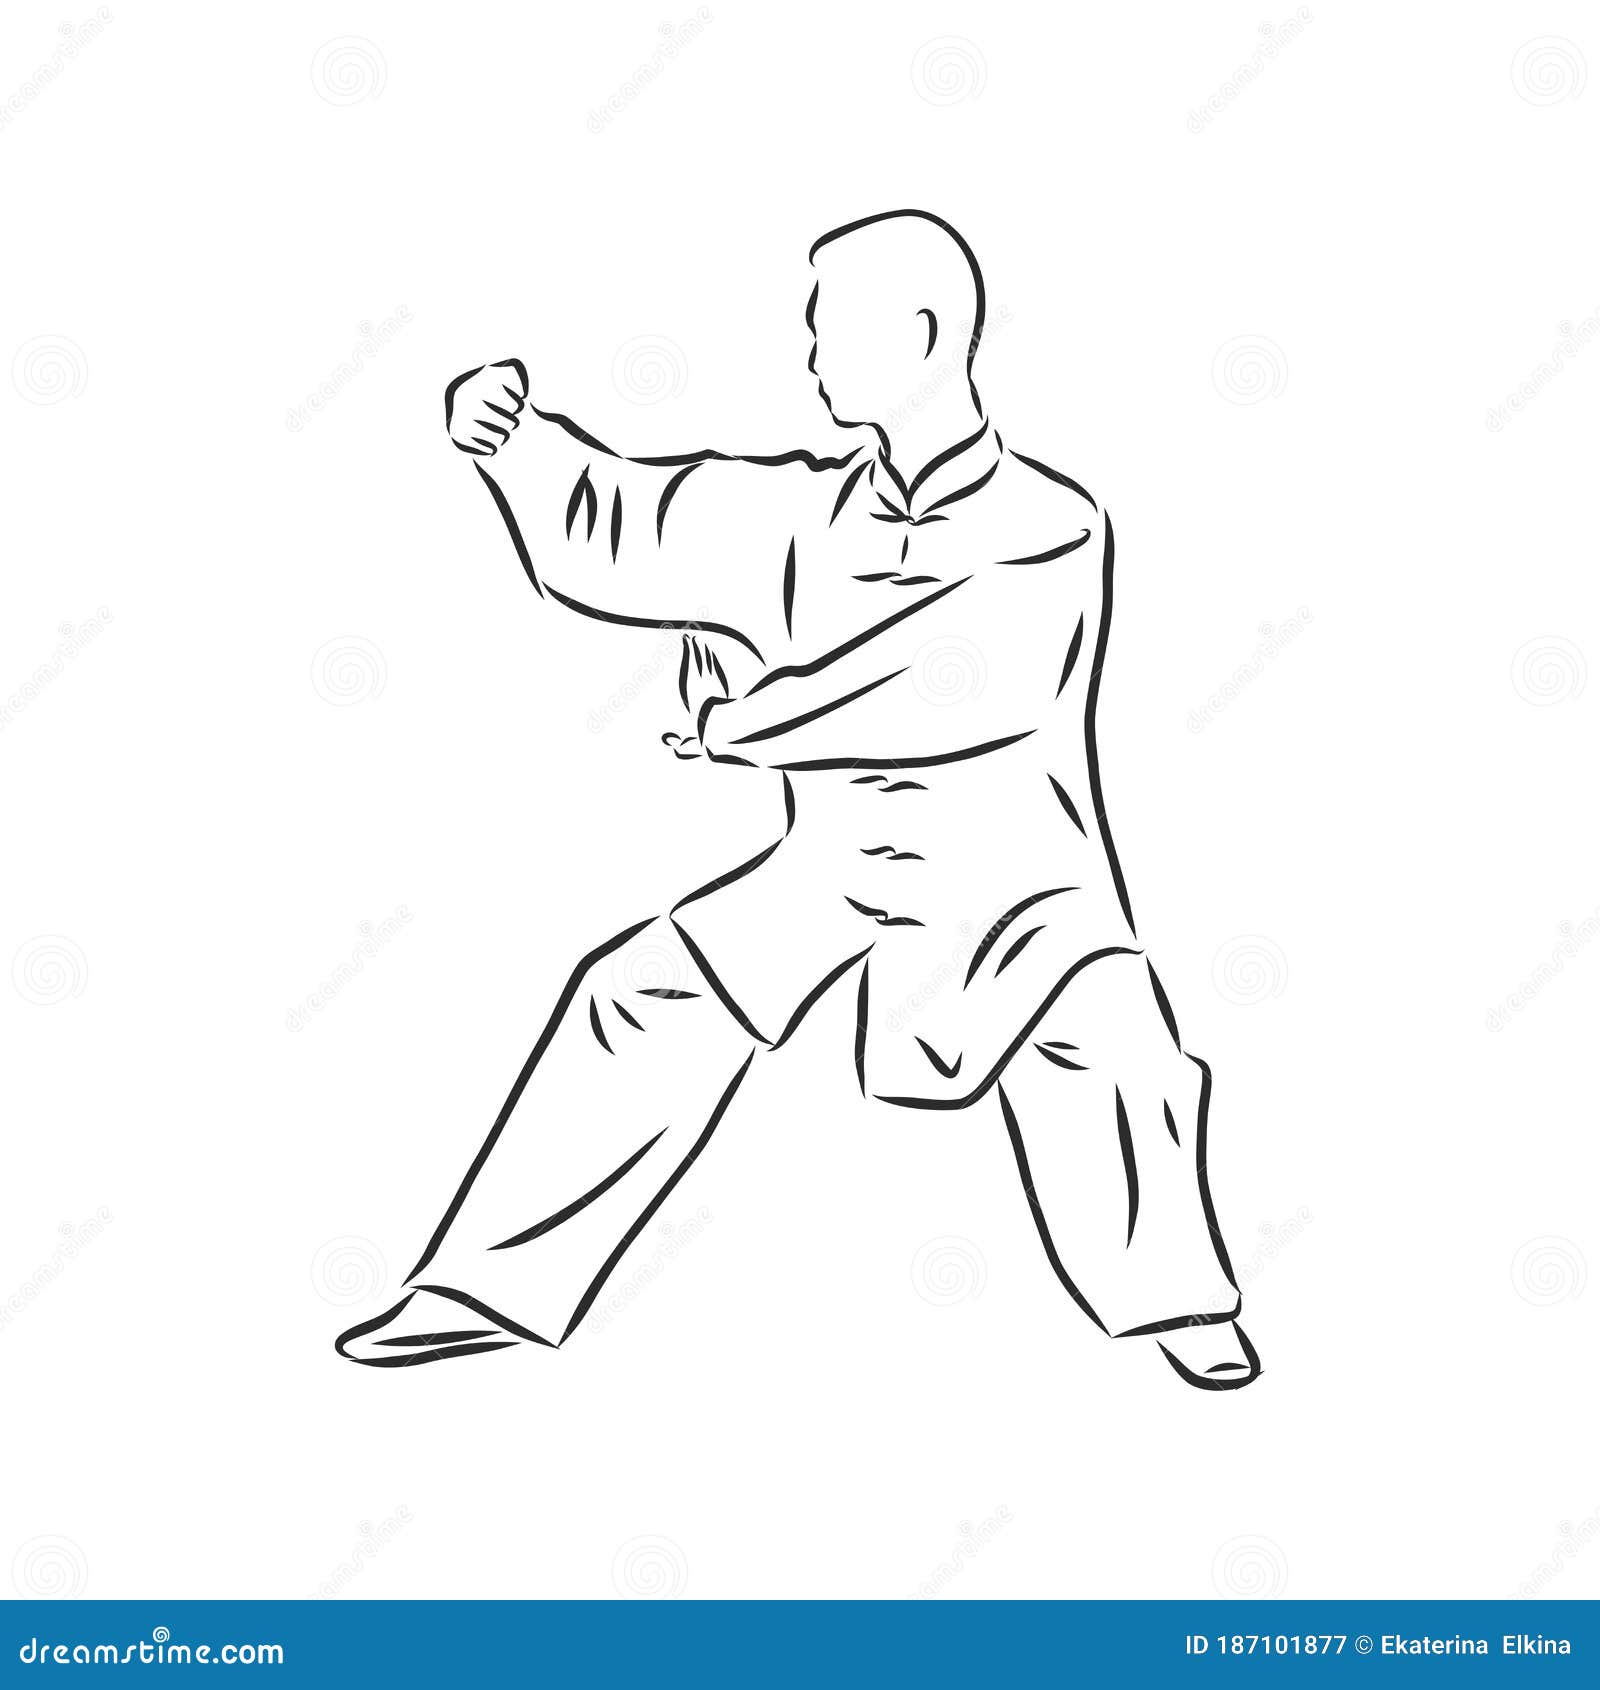 777 Kung Fu Sketch Images, Stock Photos & Vectors | Shutterstock